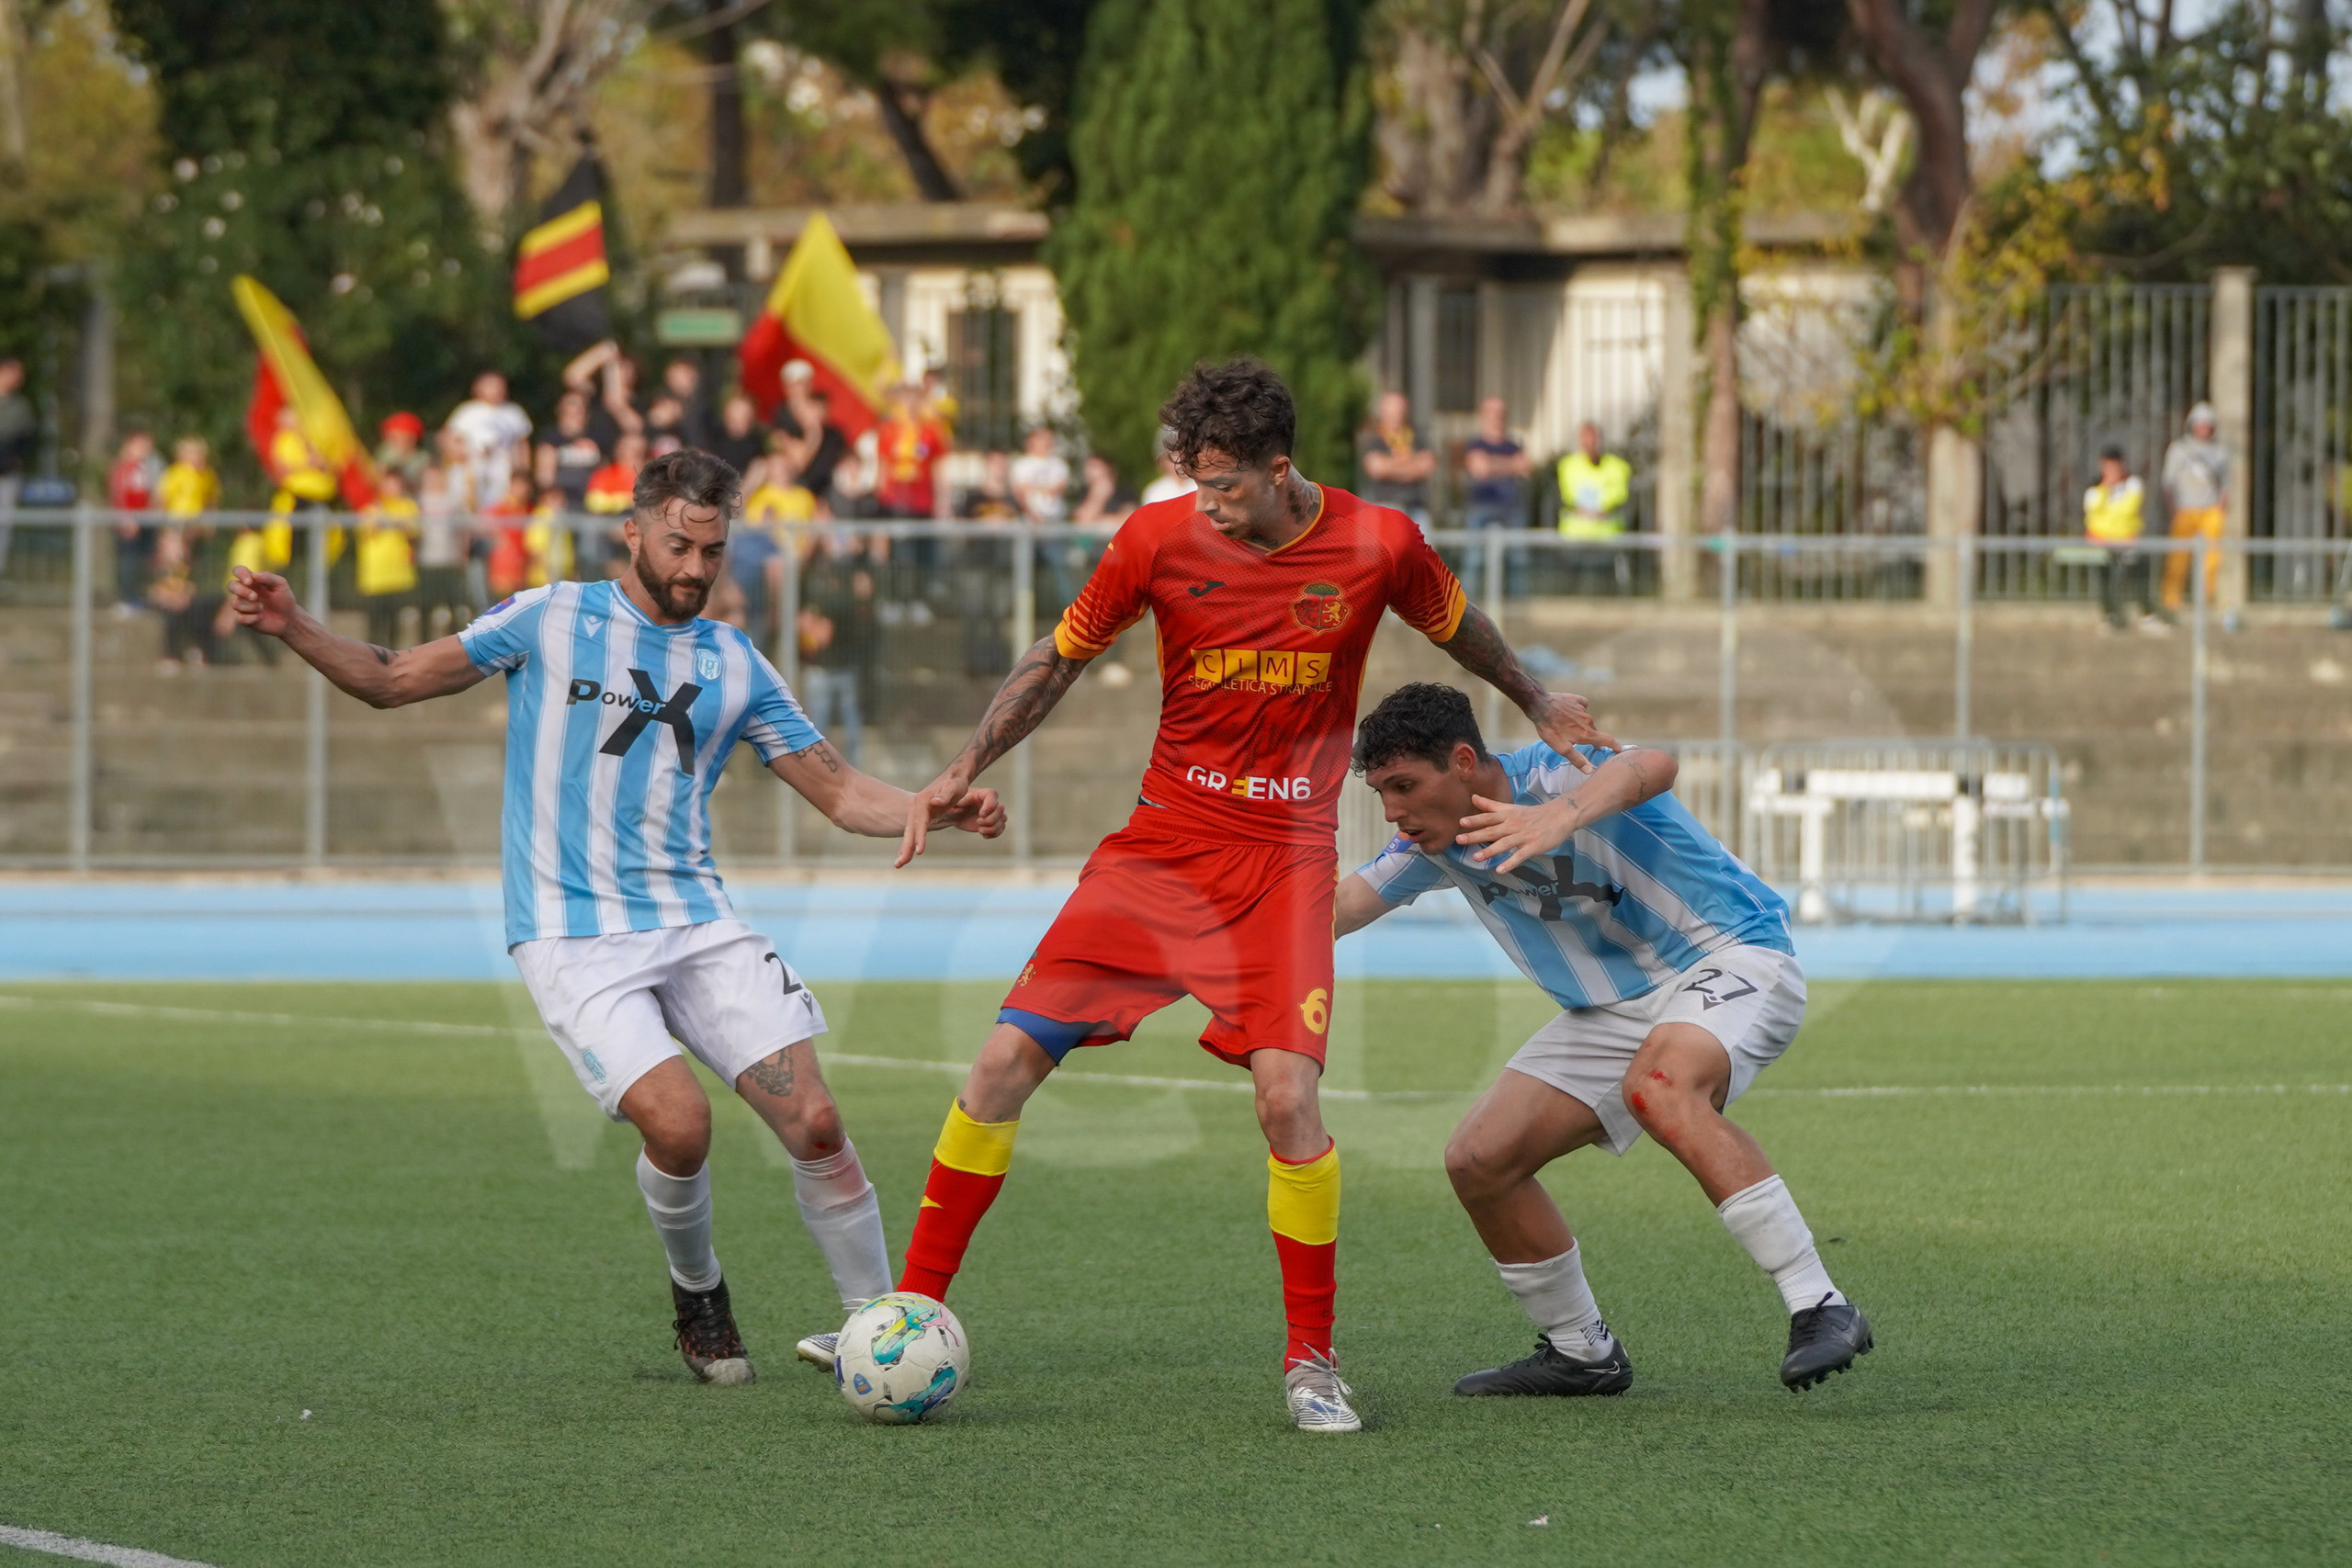 Football: Gelorossi derby at Benelli